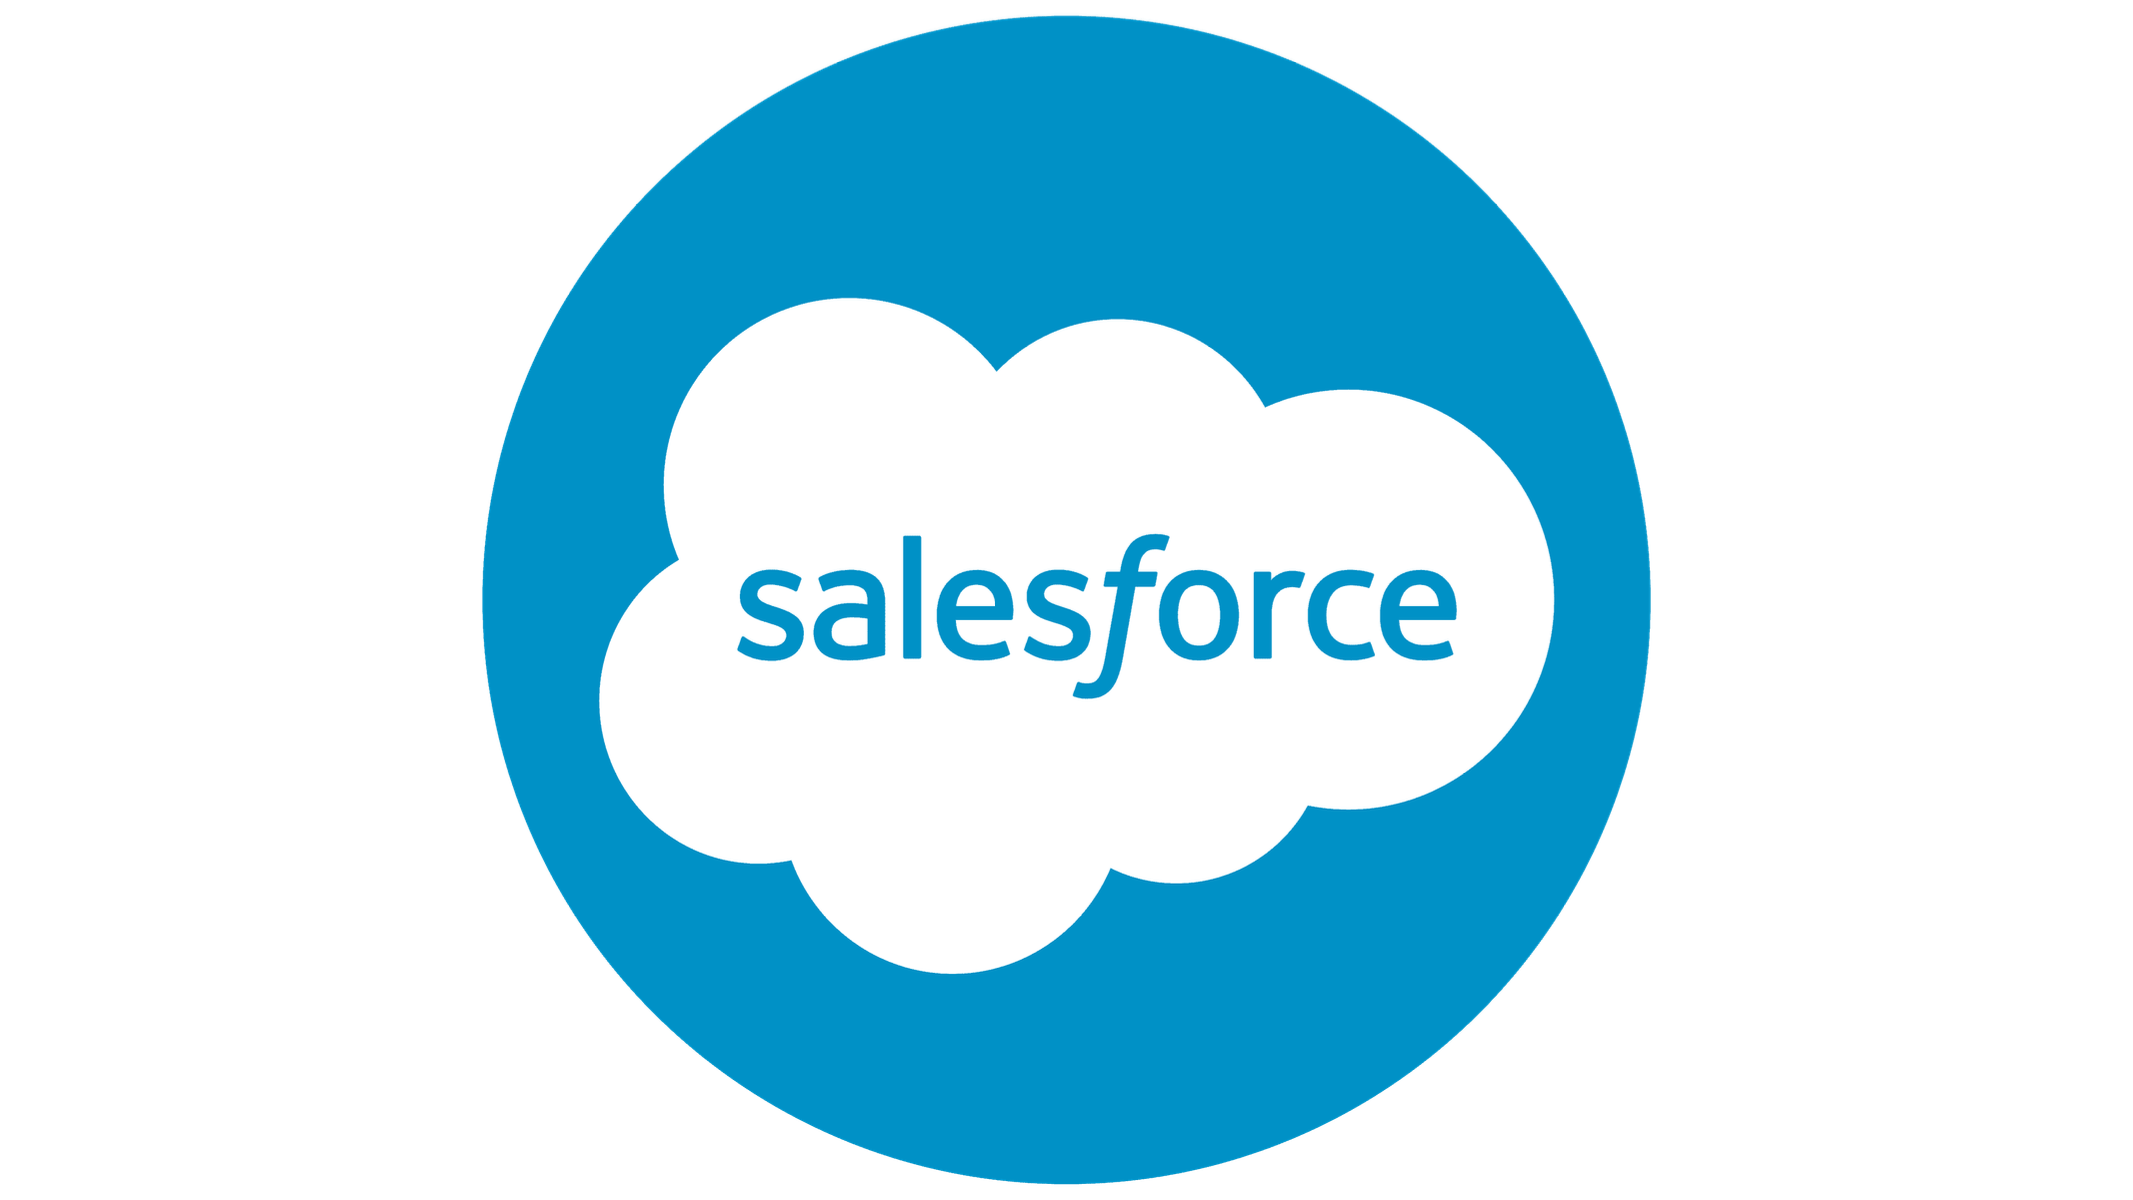 Salesforce emblem